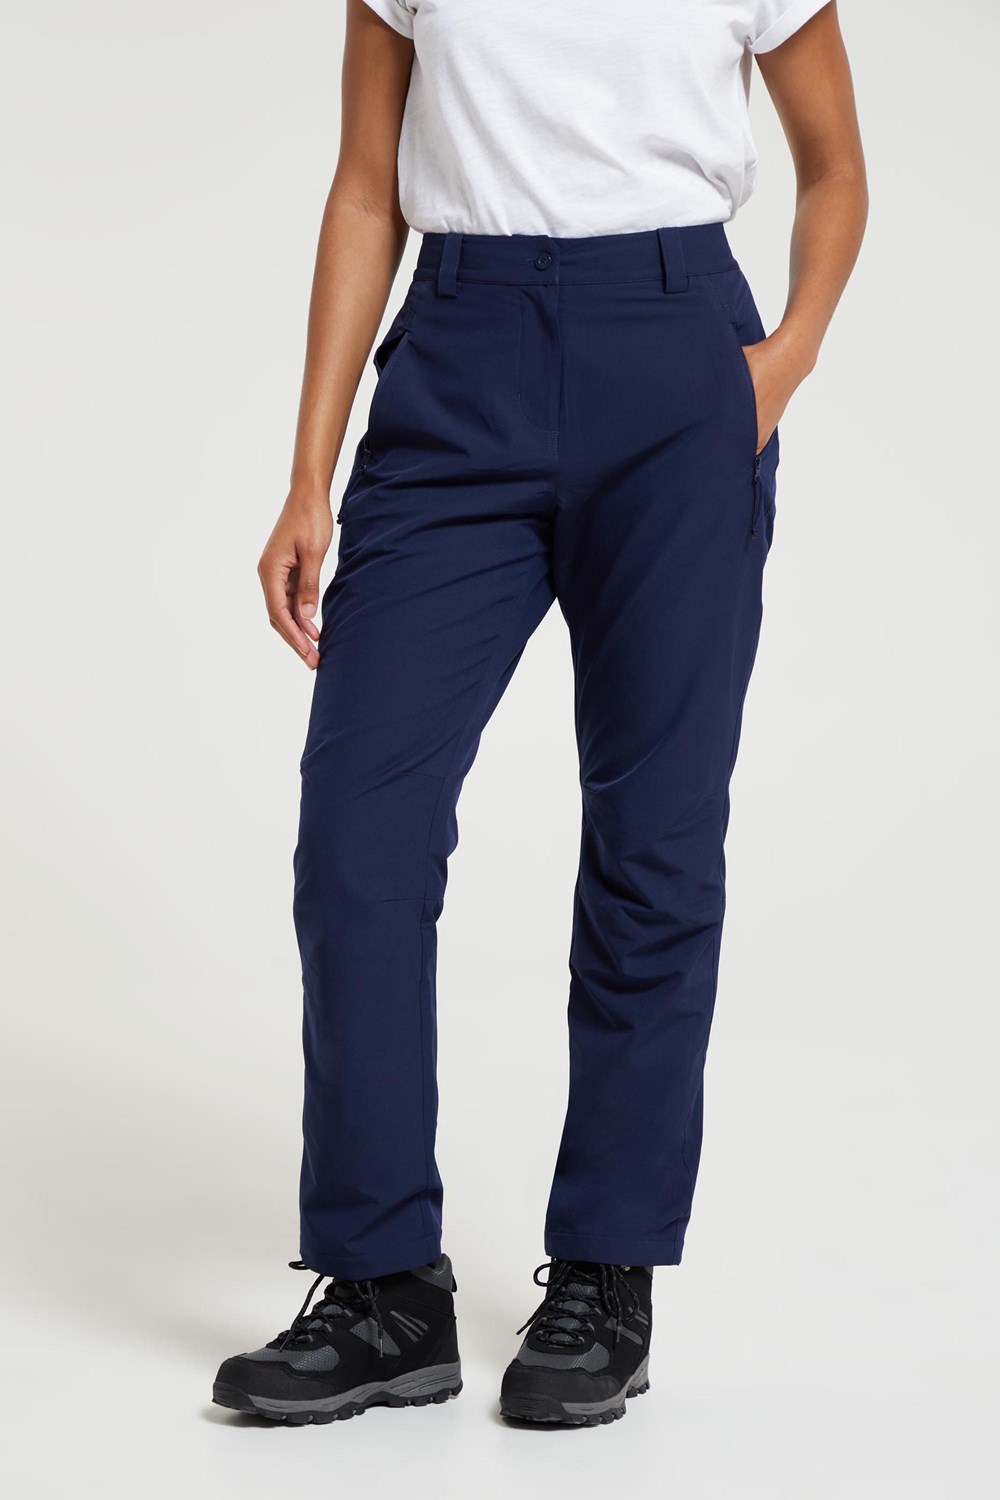 Unisex Weatherproof Fleece Lined Pants/Trousers